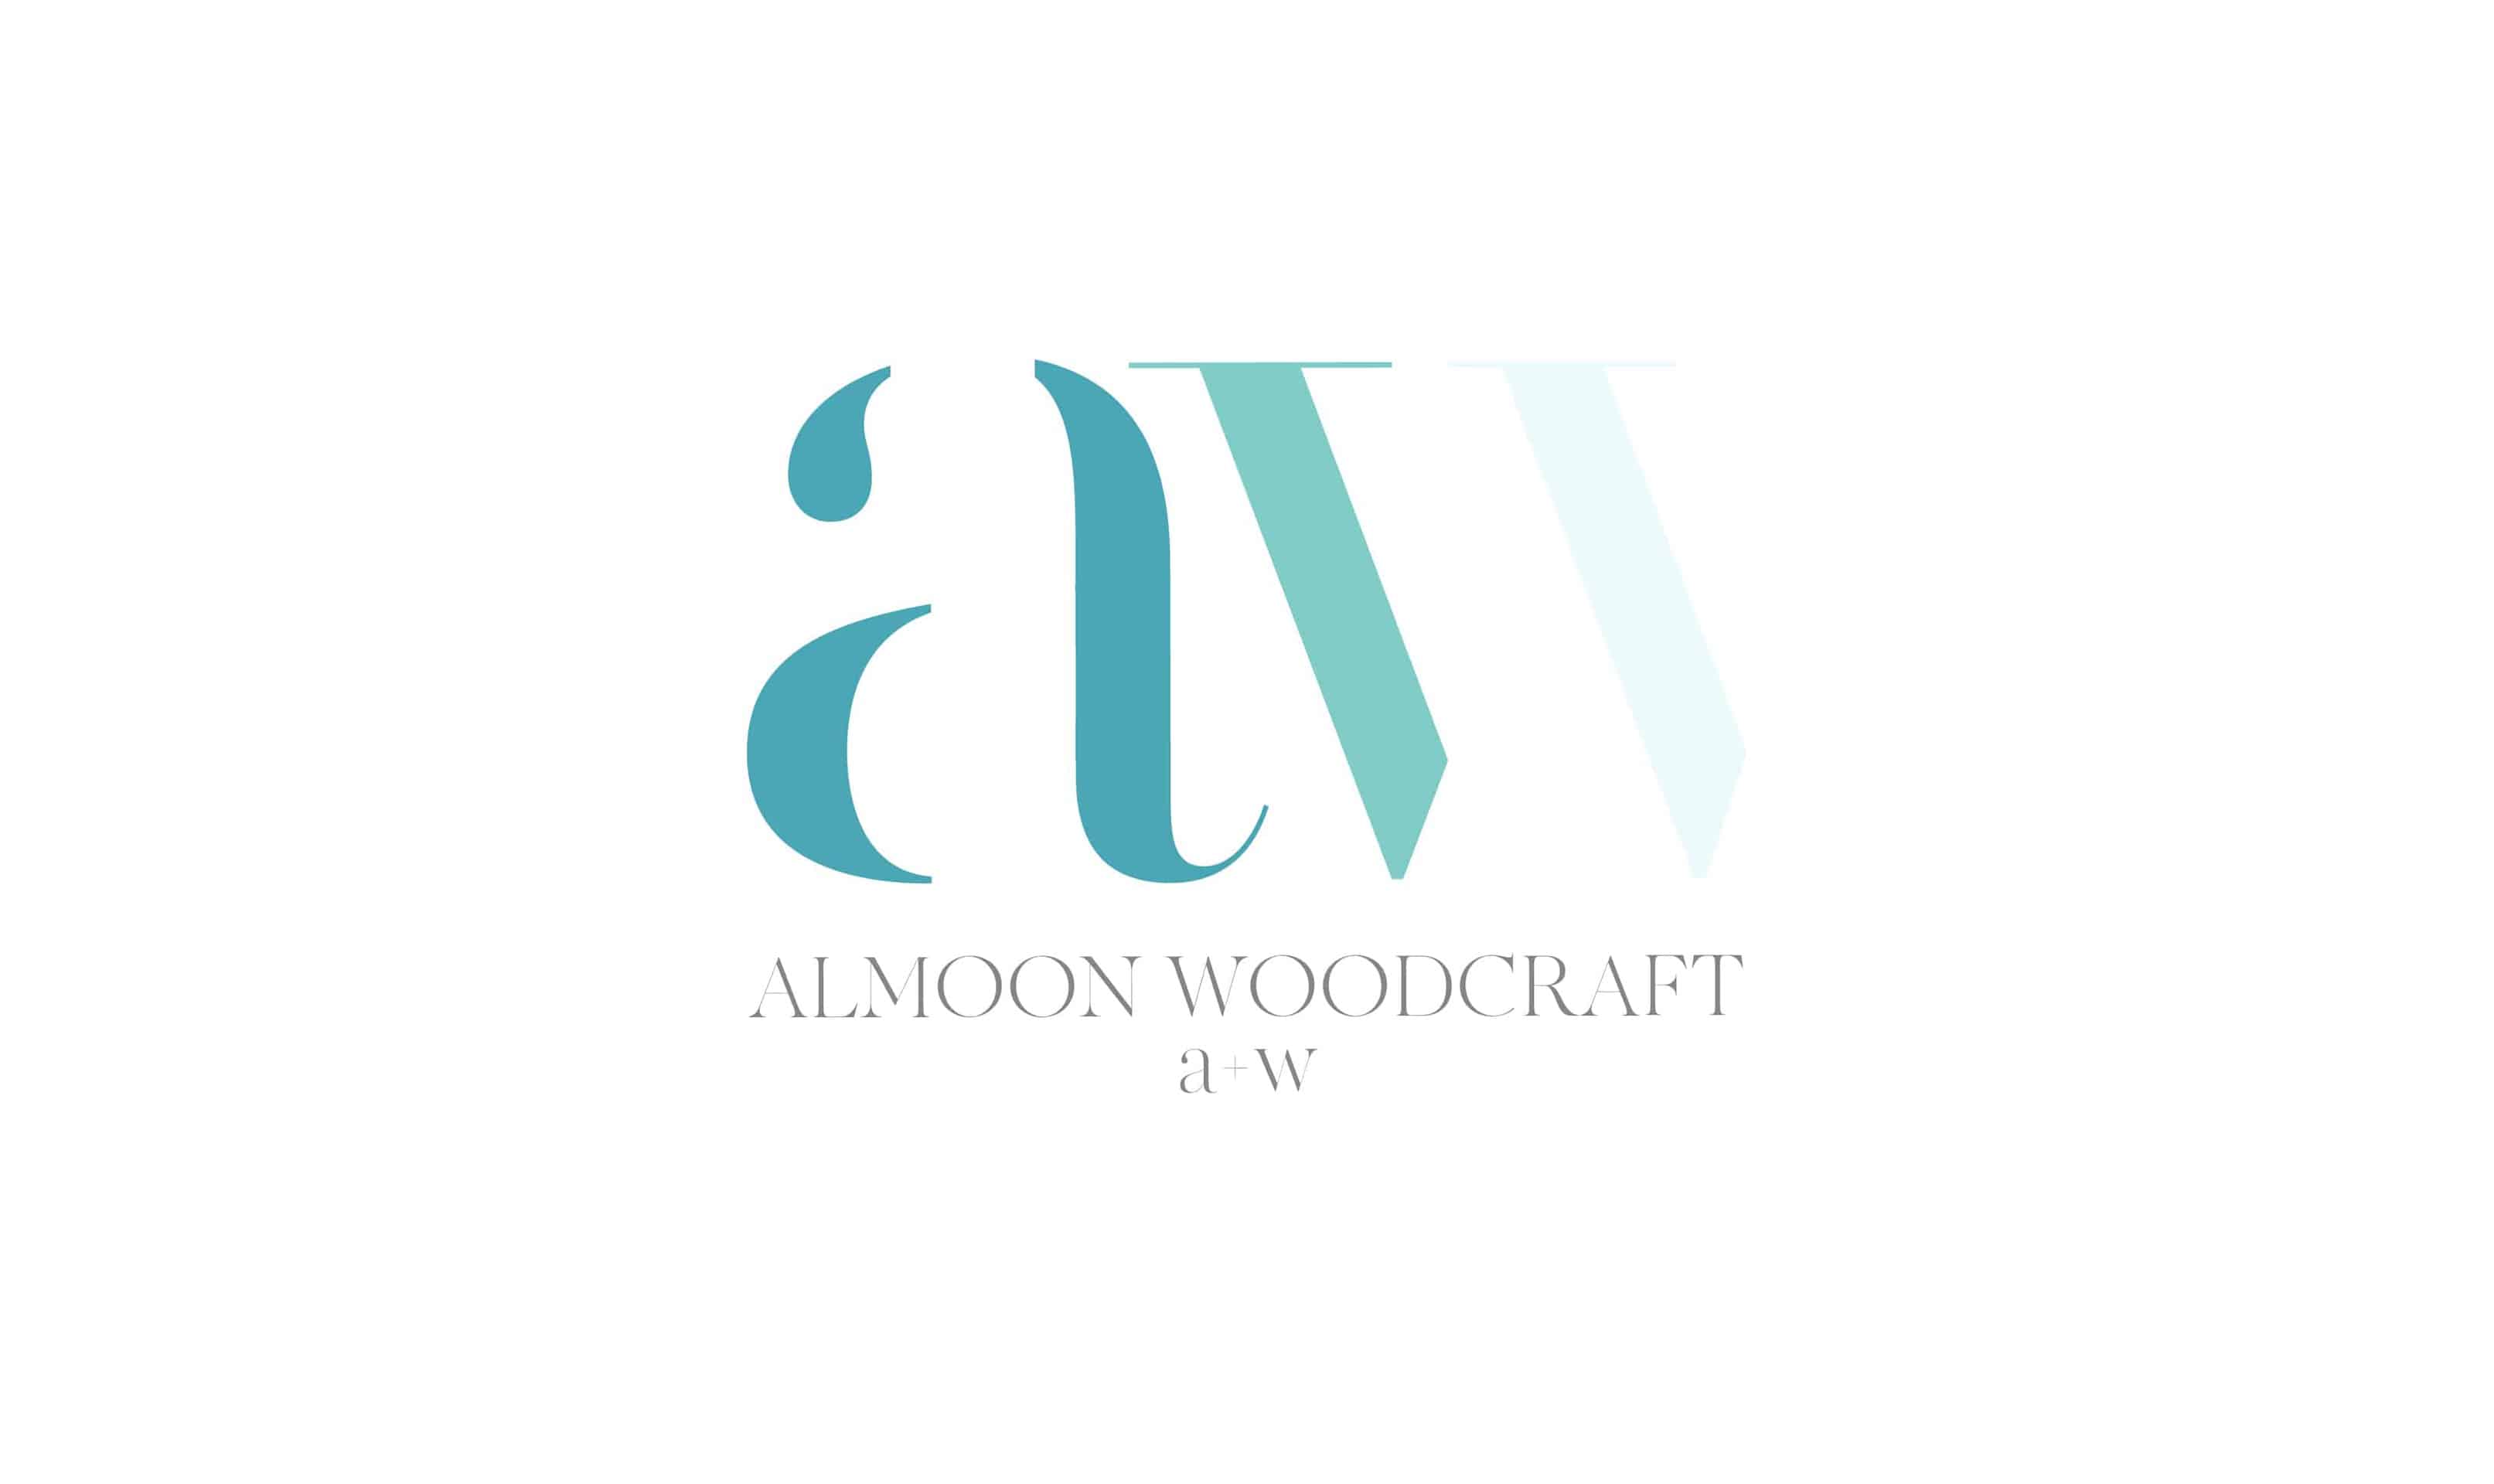 ALMOON WOODCRAFT (AW) BRANDING